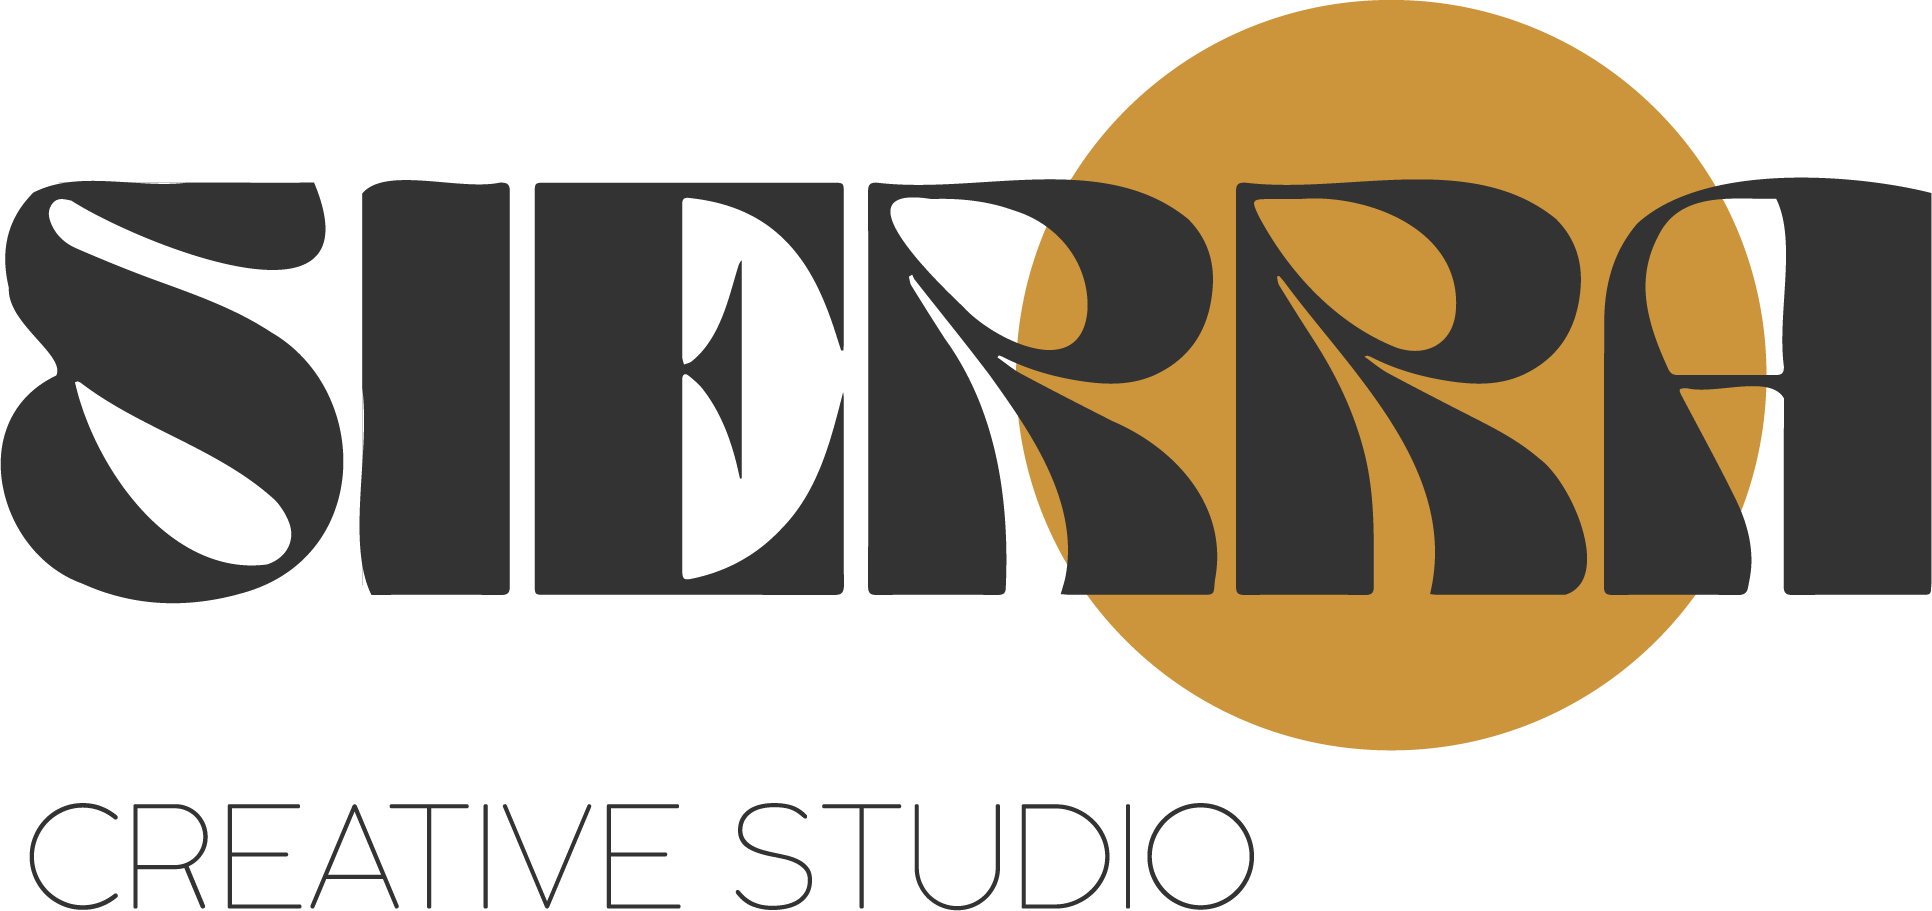 Sierra Studio